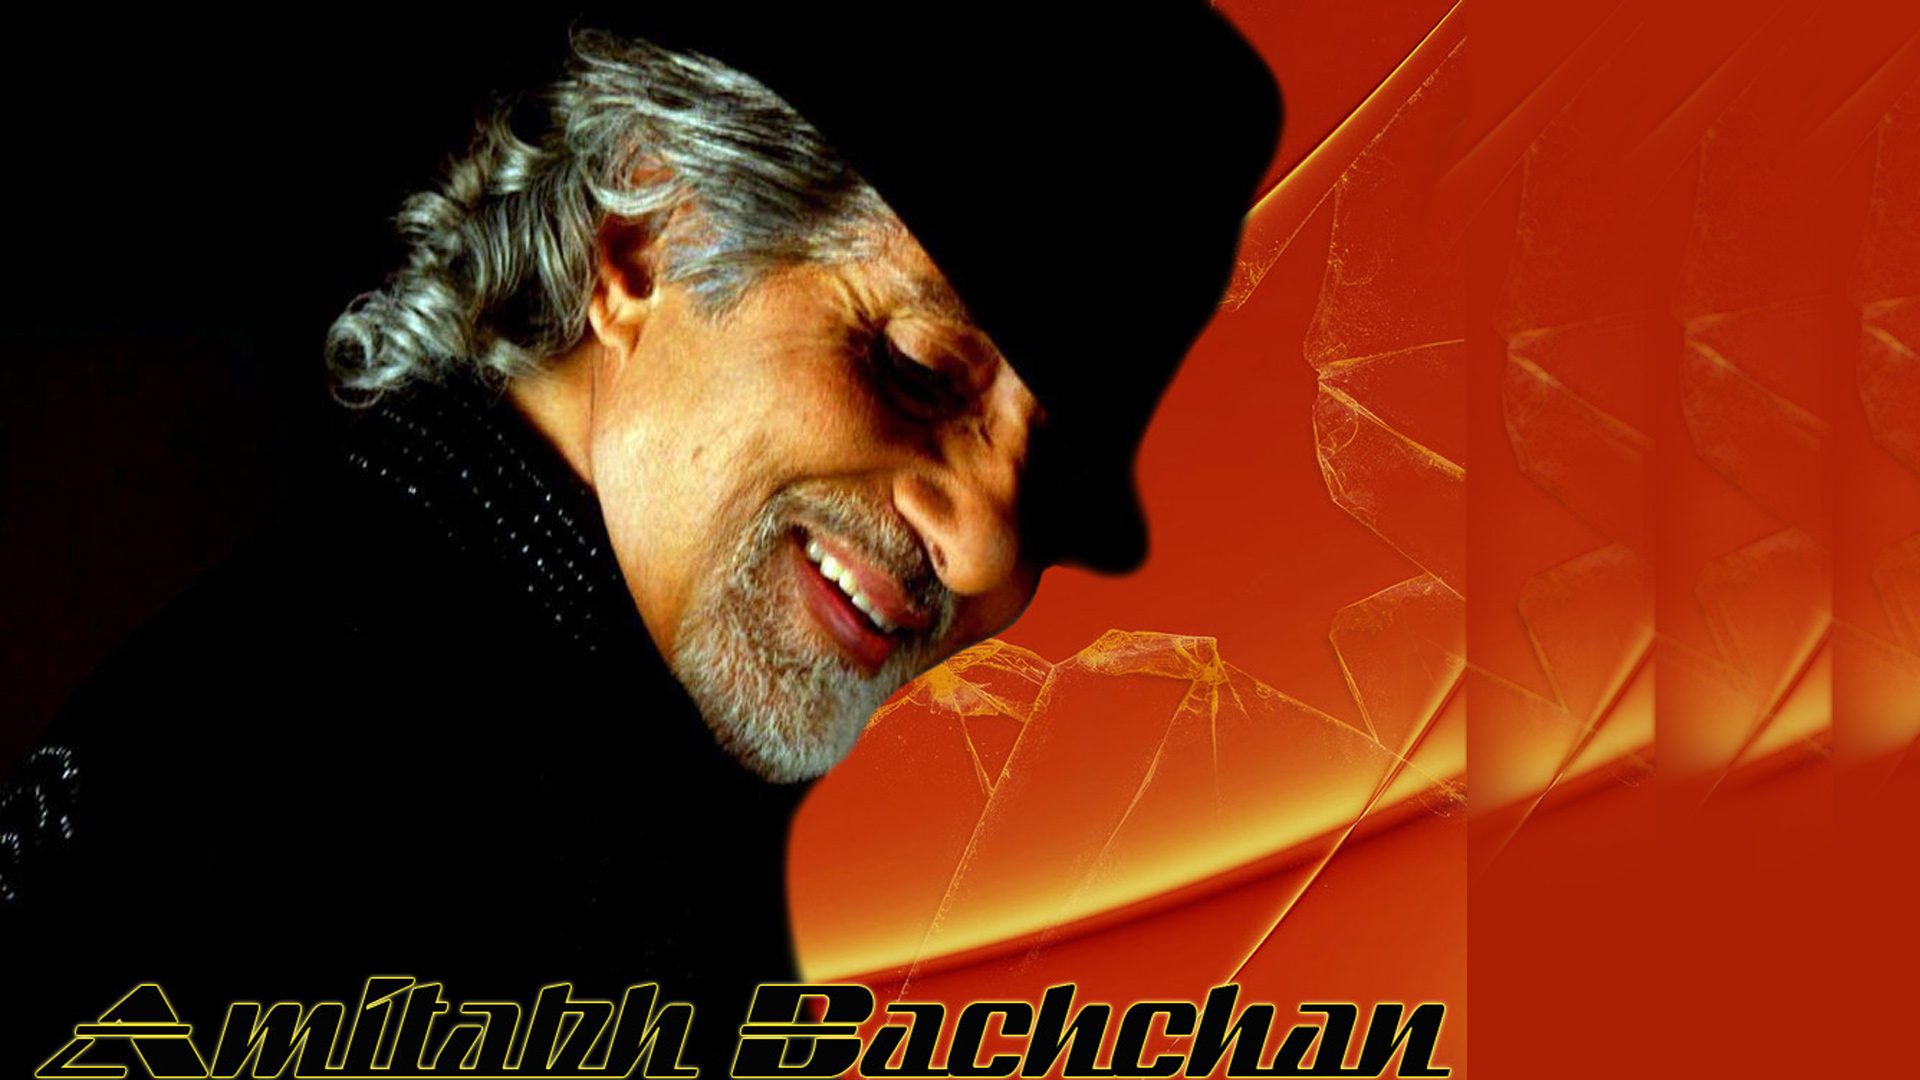 Amitabh Bachchan Wallpapers | Amitabh Bachchan Wallpapers | Wallpaper 2of 5 | Amitabh Bachchan New Stills